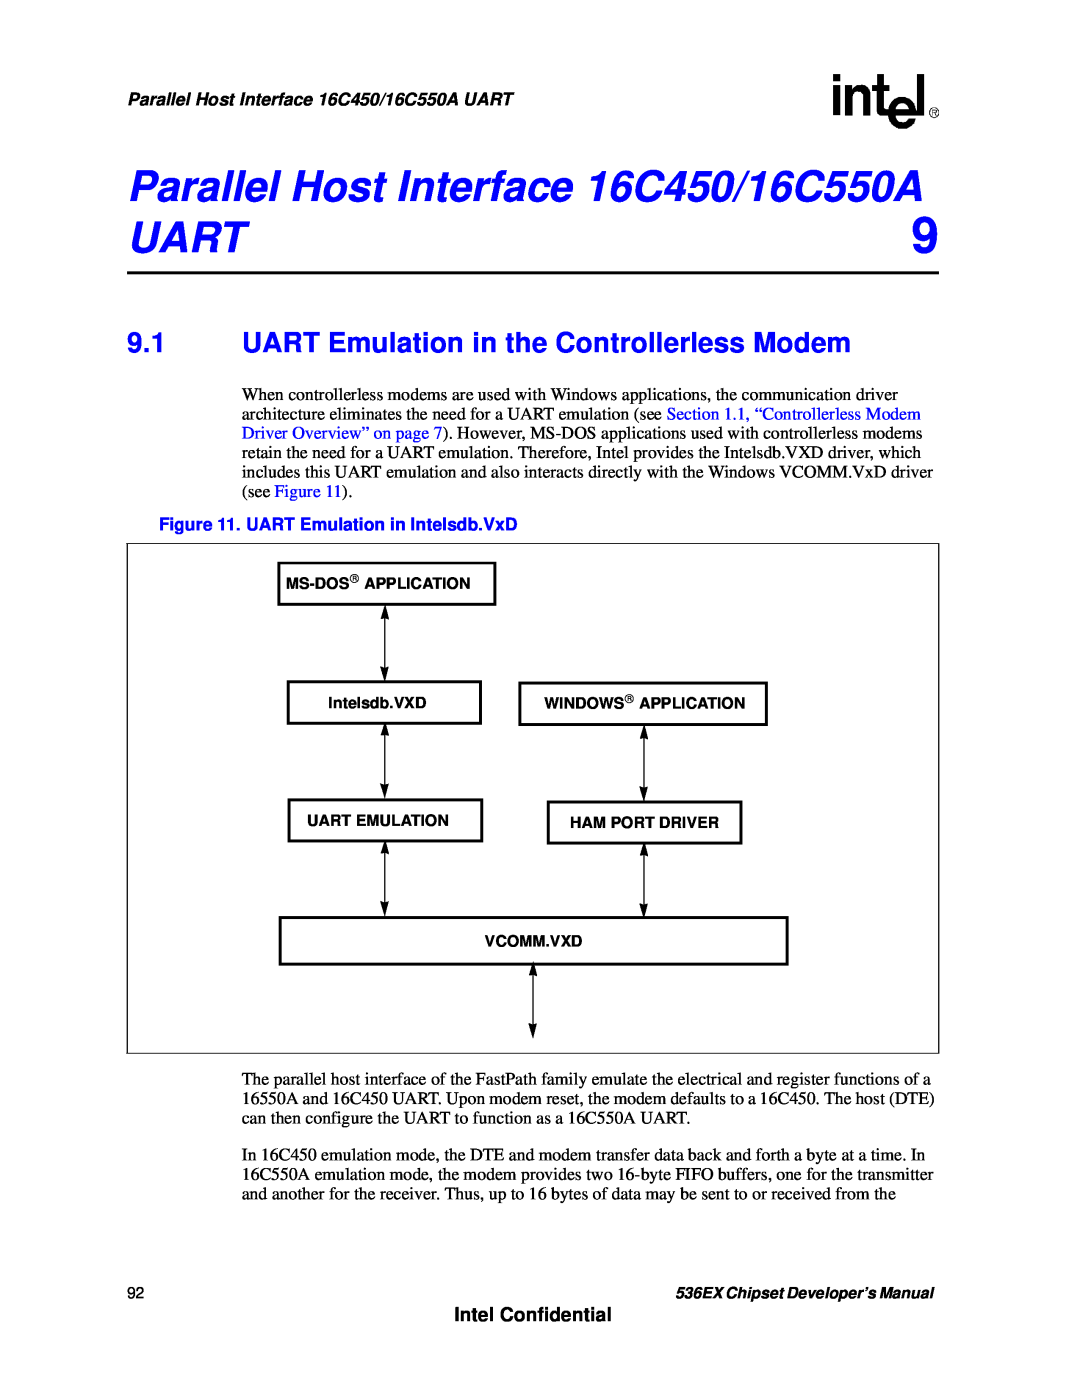 Intel 537EX Uart, Intel Confidential, Parallel Host Interface 16C450/16C550A UART, UART Emulation in Intelsdb.VxD 